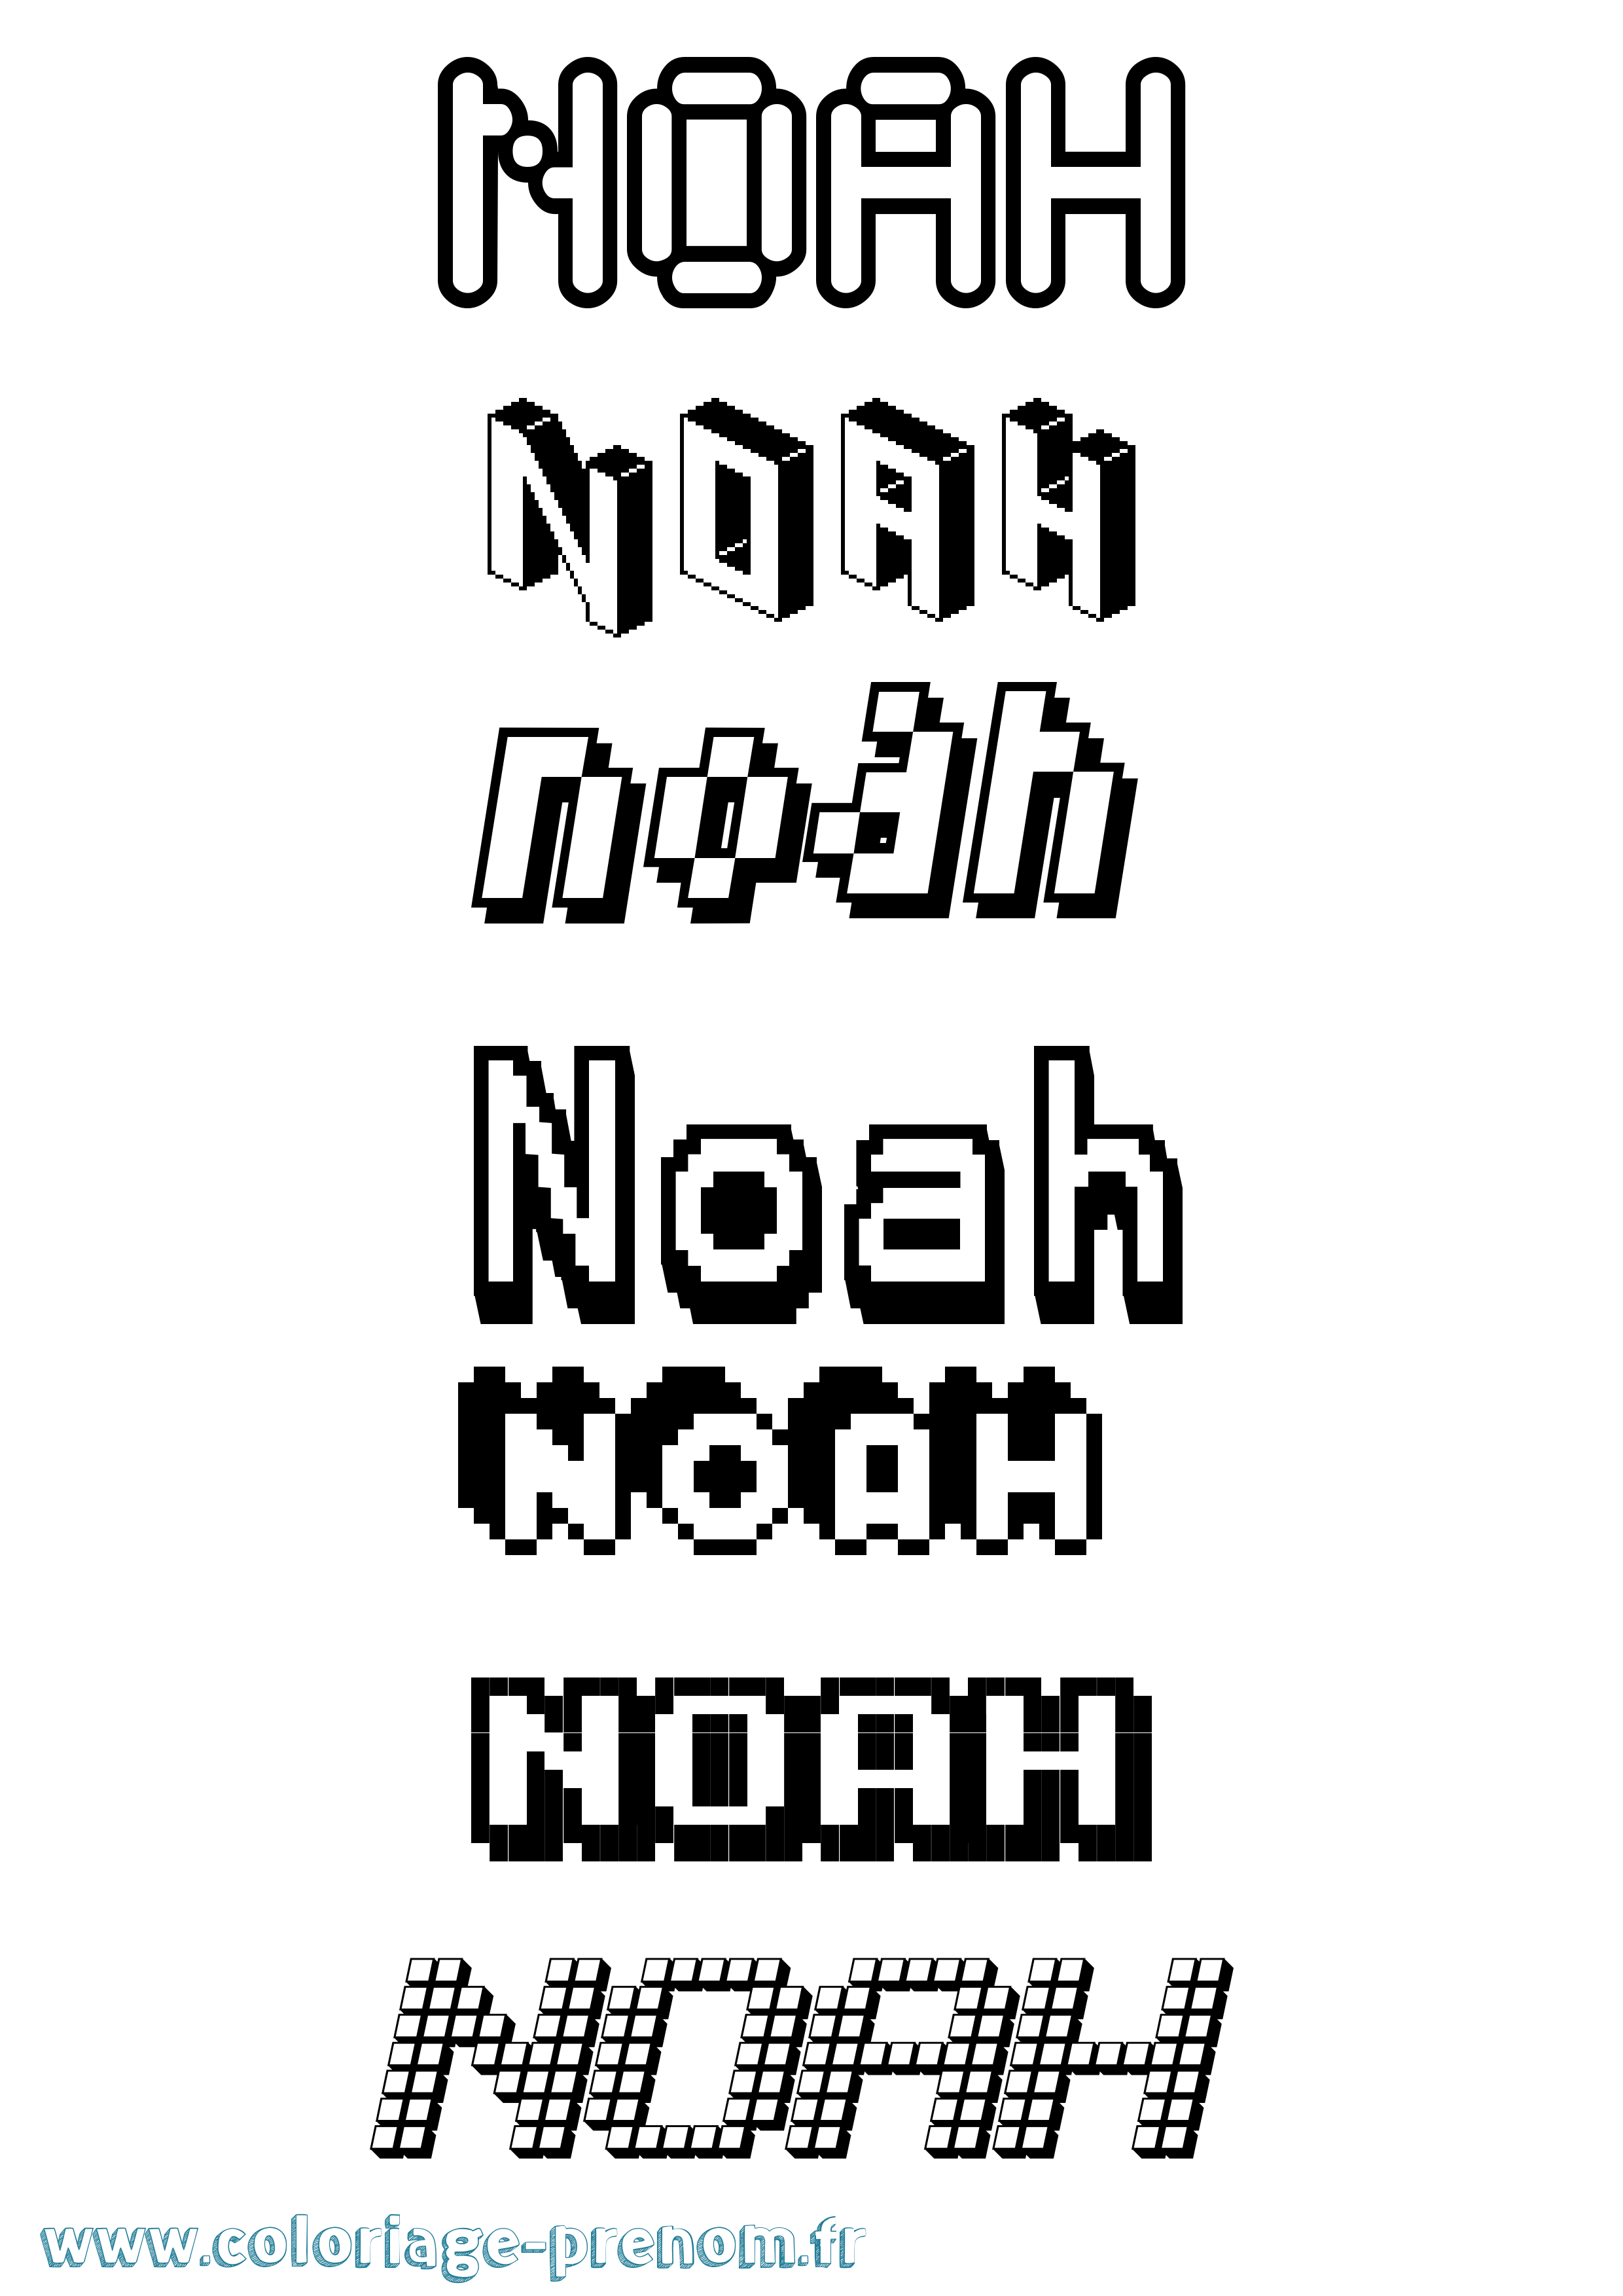 Coloriage prénom Noah